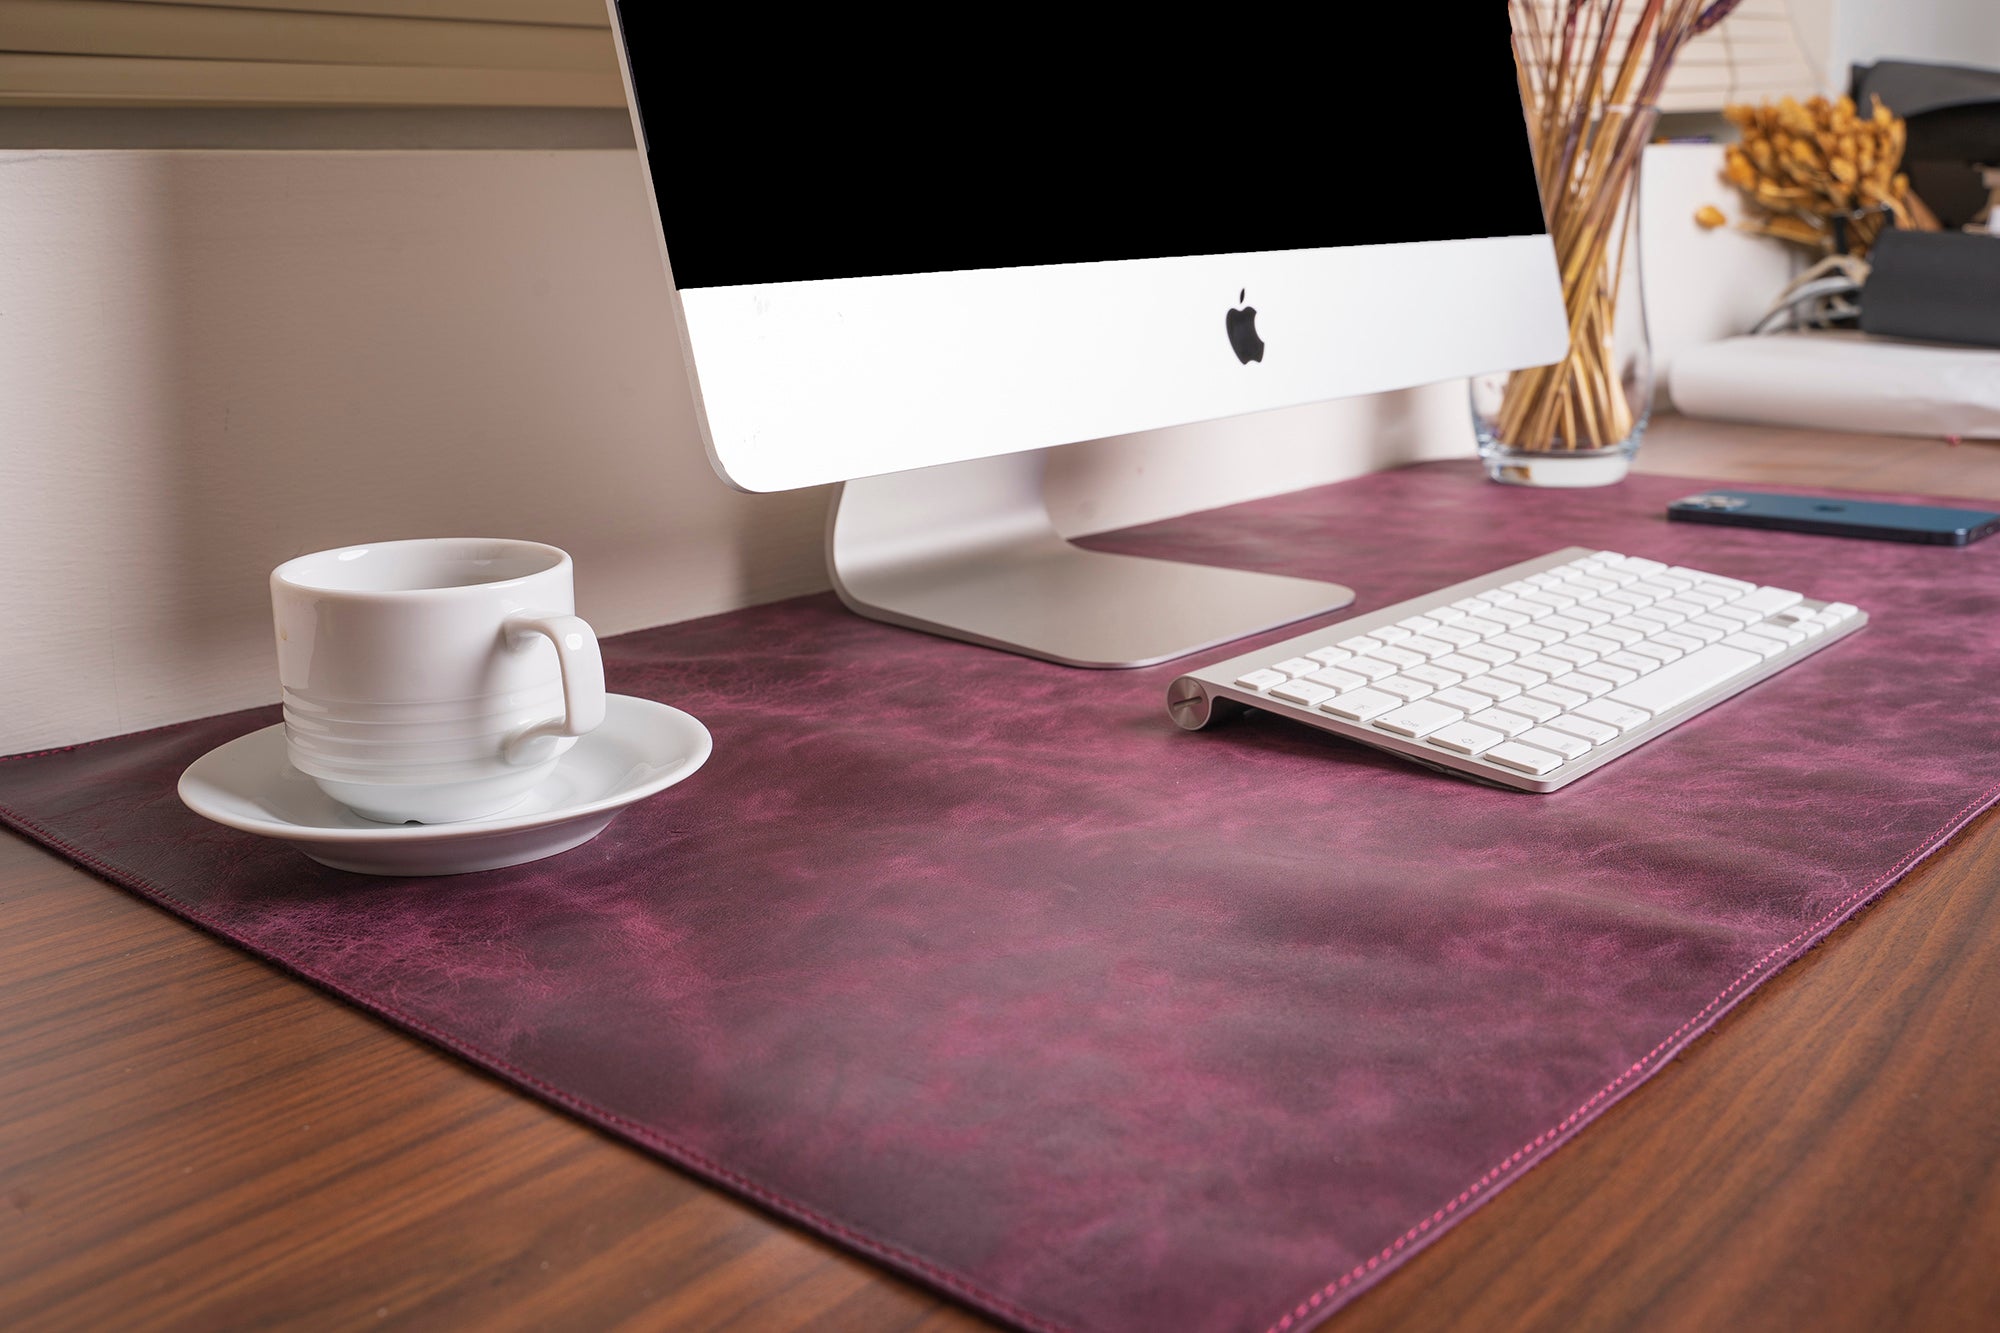 DelfiCase Genuine Cherry Leather Deskmat, Computer Pad, Office Desk Pad